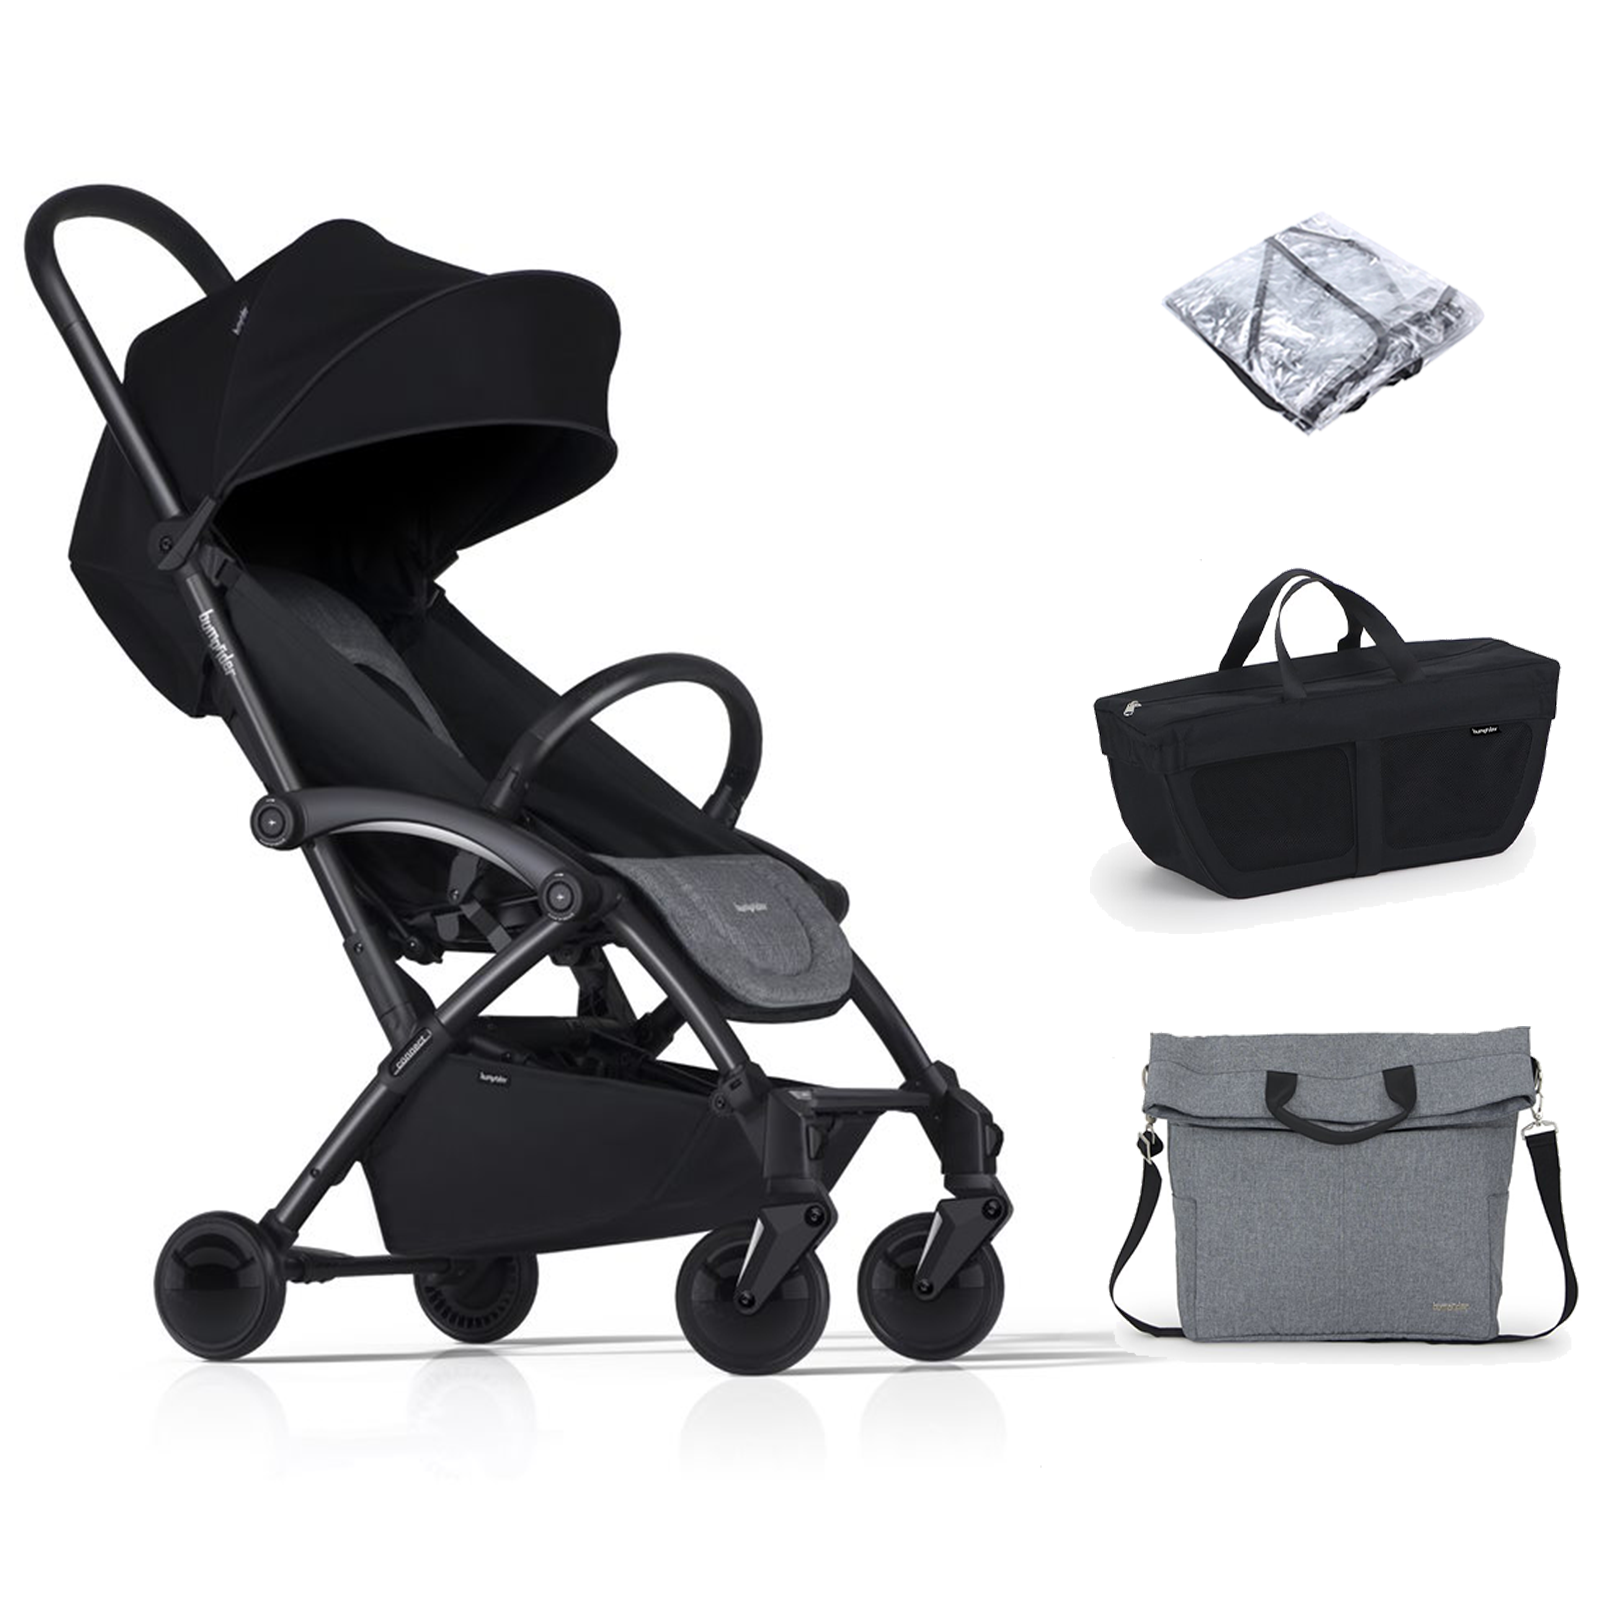 Bumprider Connect2 Stroller with Side Bag & Side Pack - Black & Grey